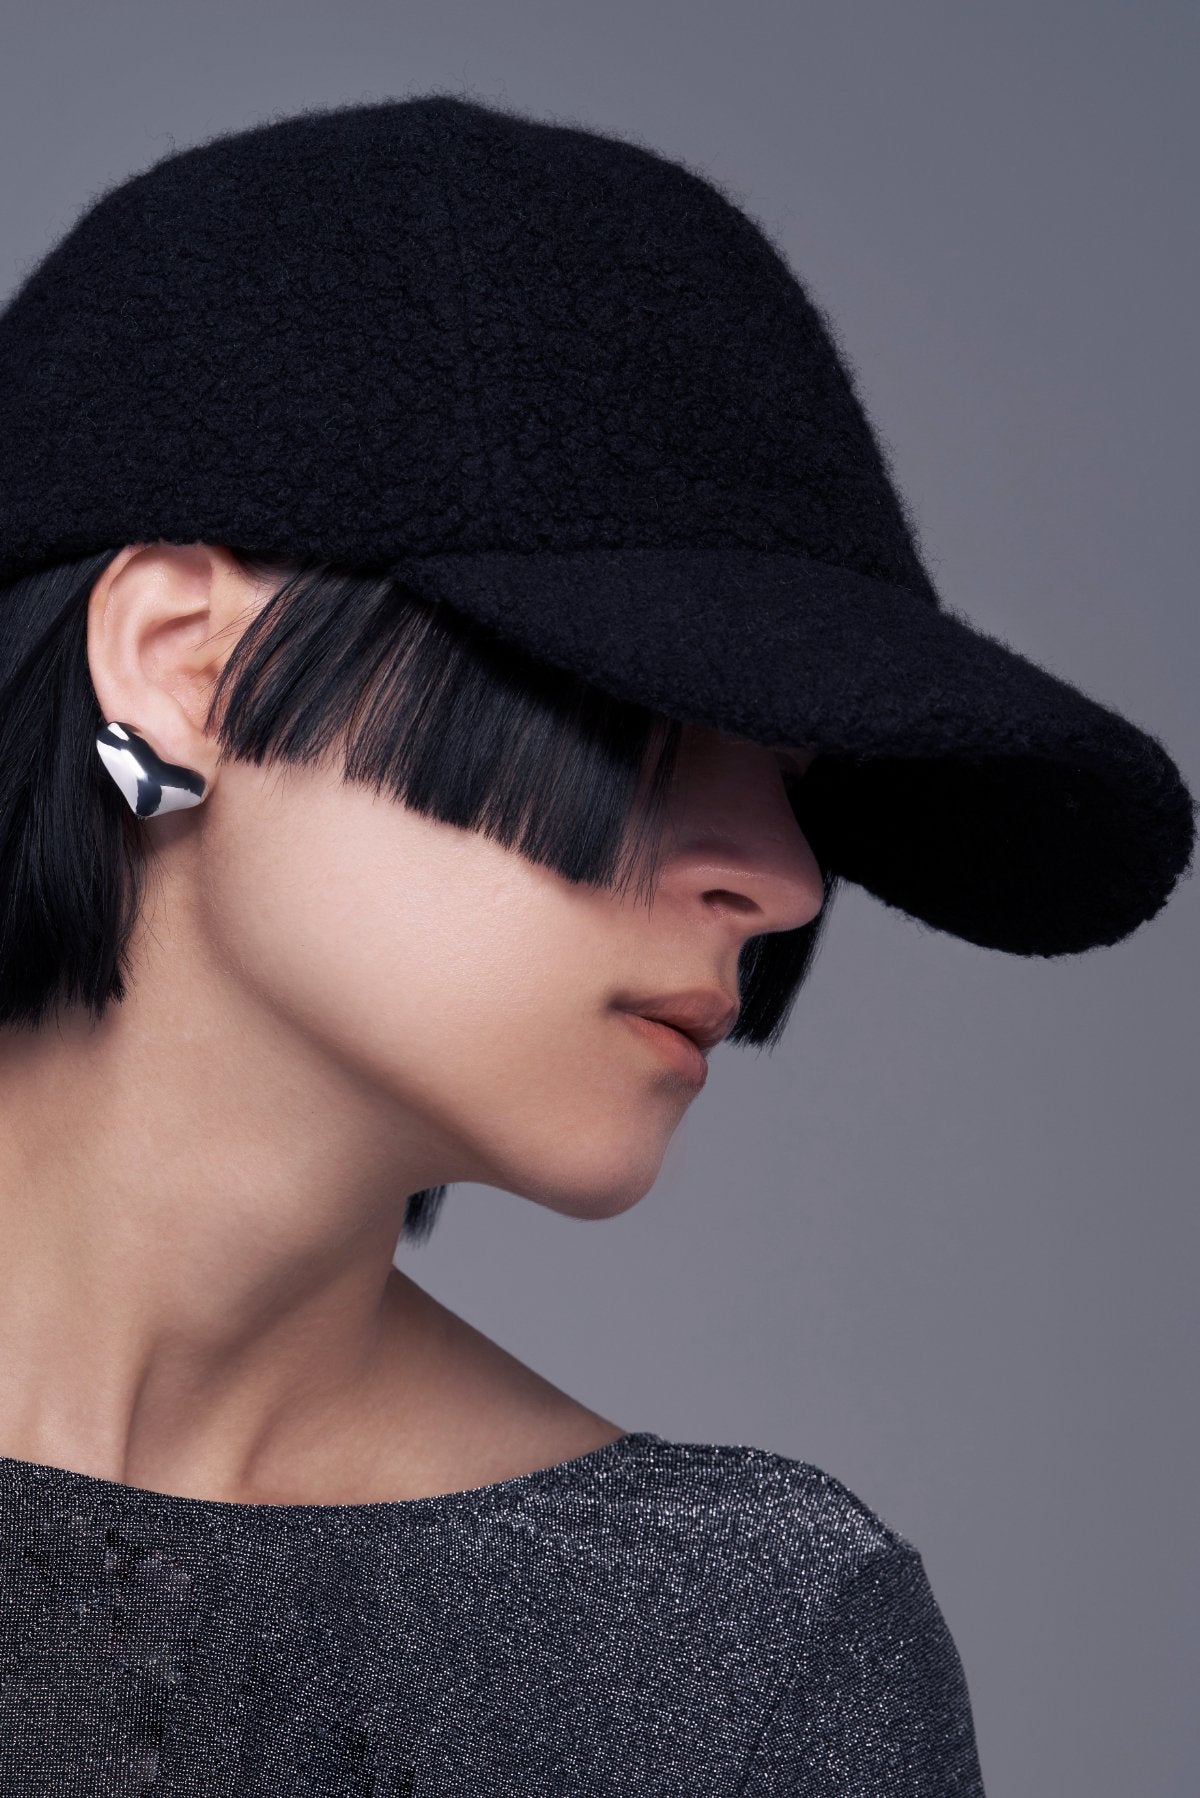   puffy  cap black 税込¥15,400     petite mind earring SV 税込¥12,100   